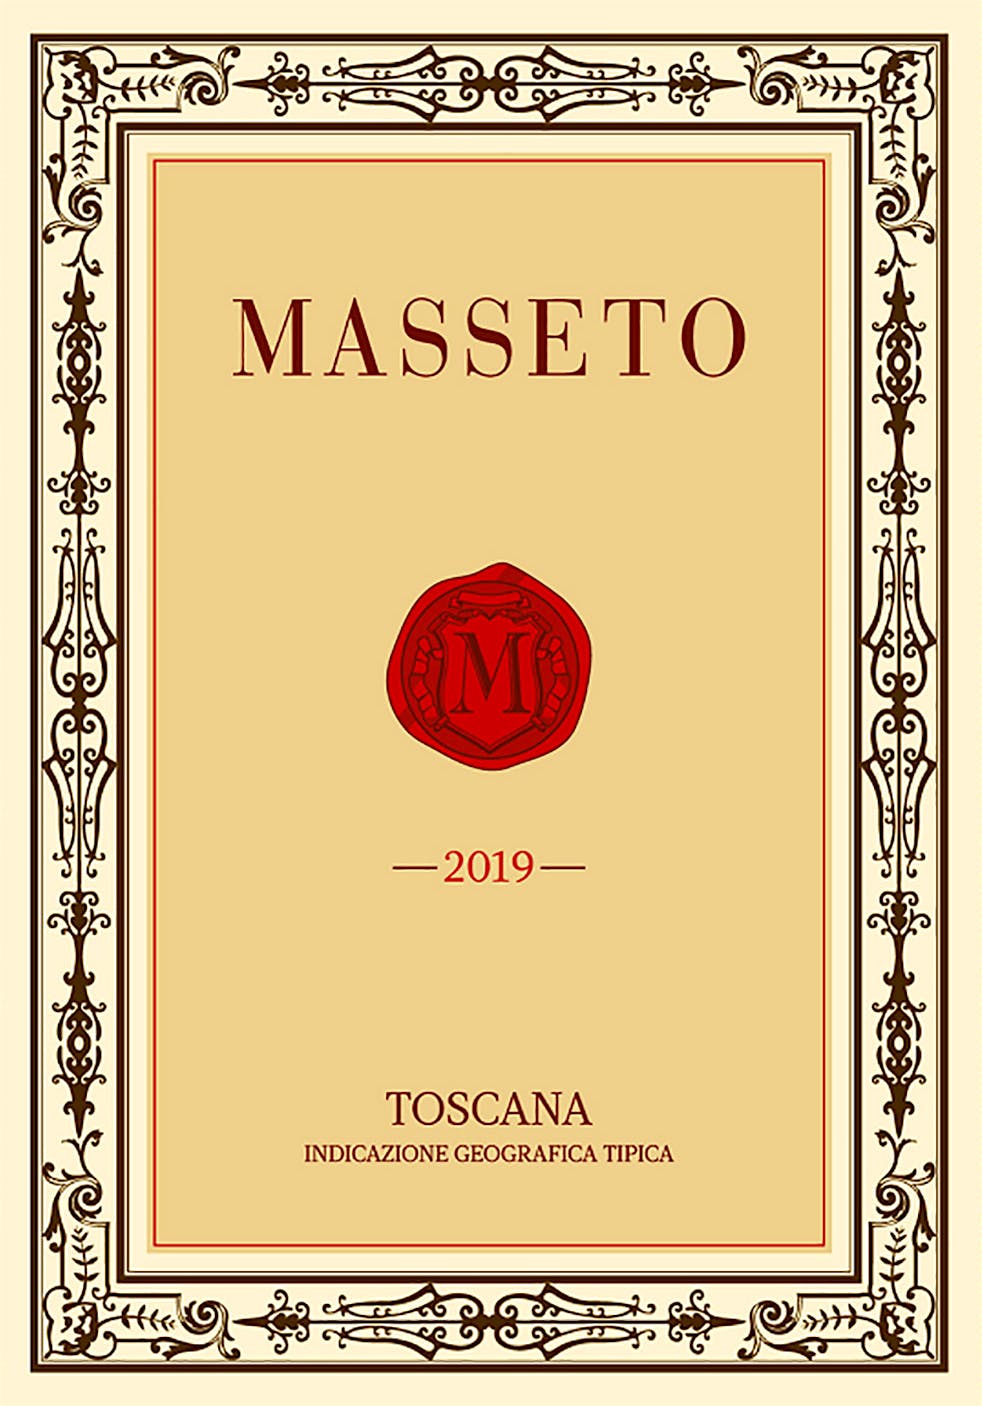 Label for Masseto